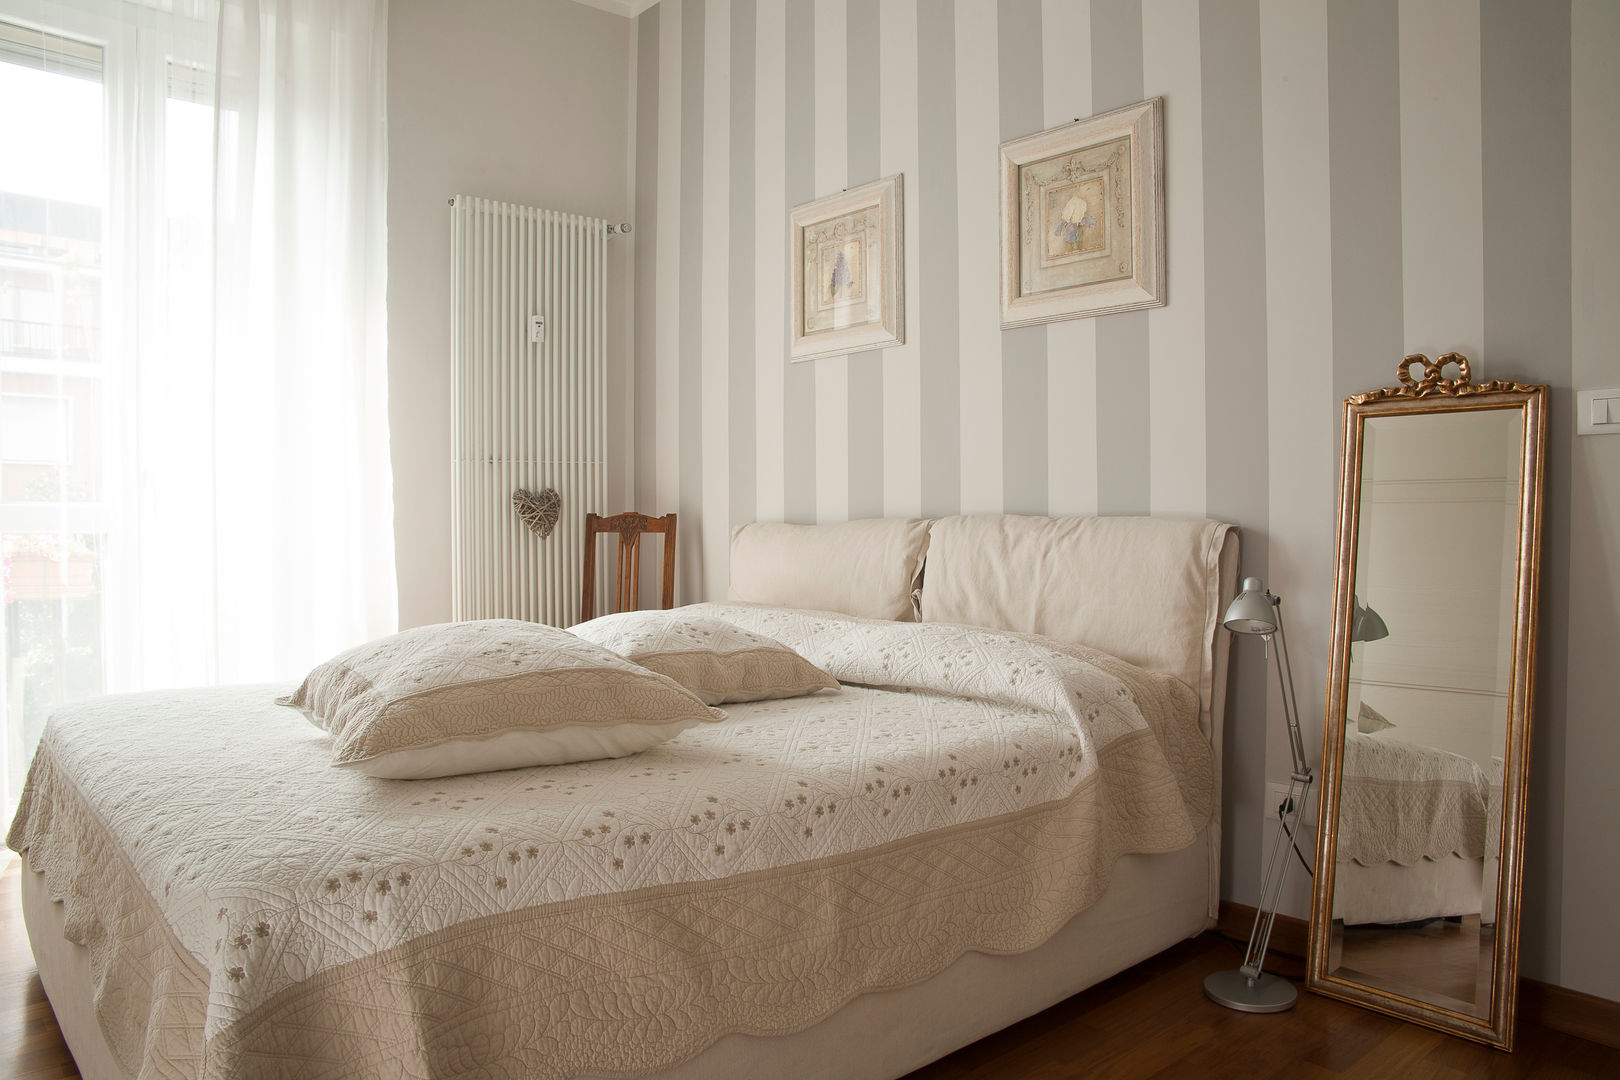 _Mondrian Home_, Alessandro Multari Ingegnere - I AM puro ingegno italiano Alessandro Multari Ingegnere - I AM puro ingegno italiano Classic style bedroom